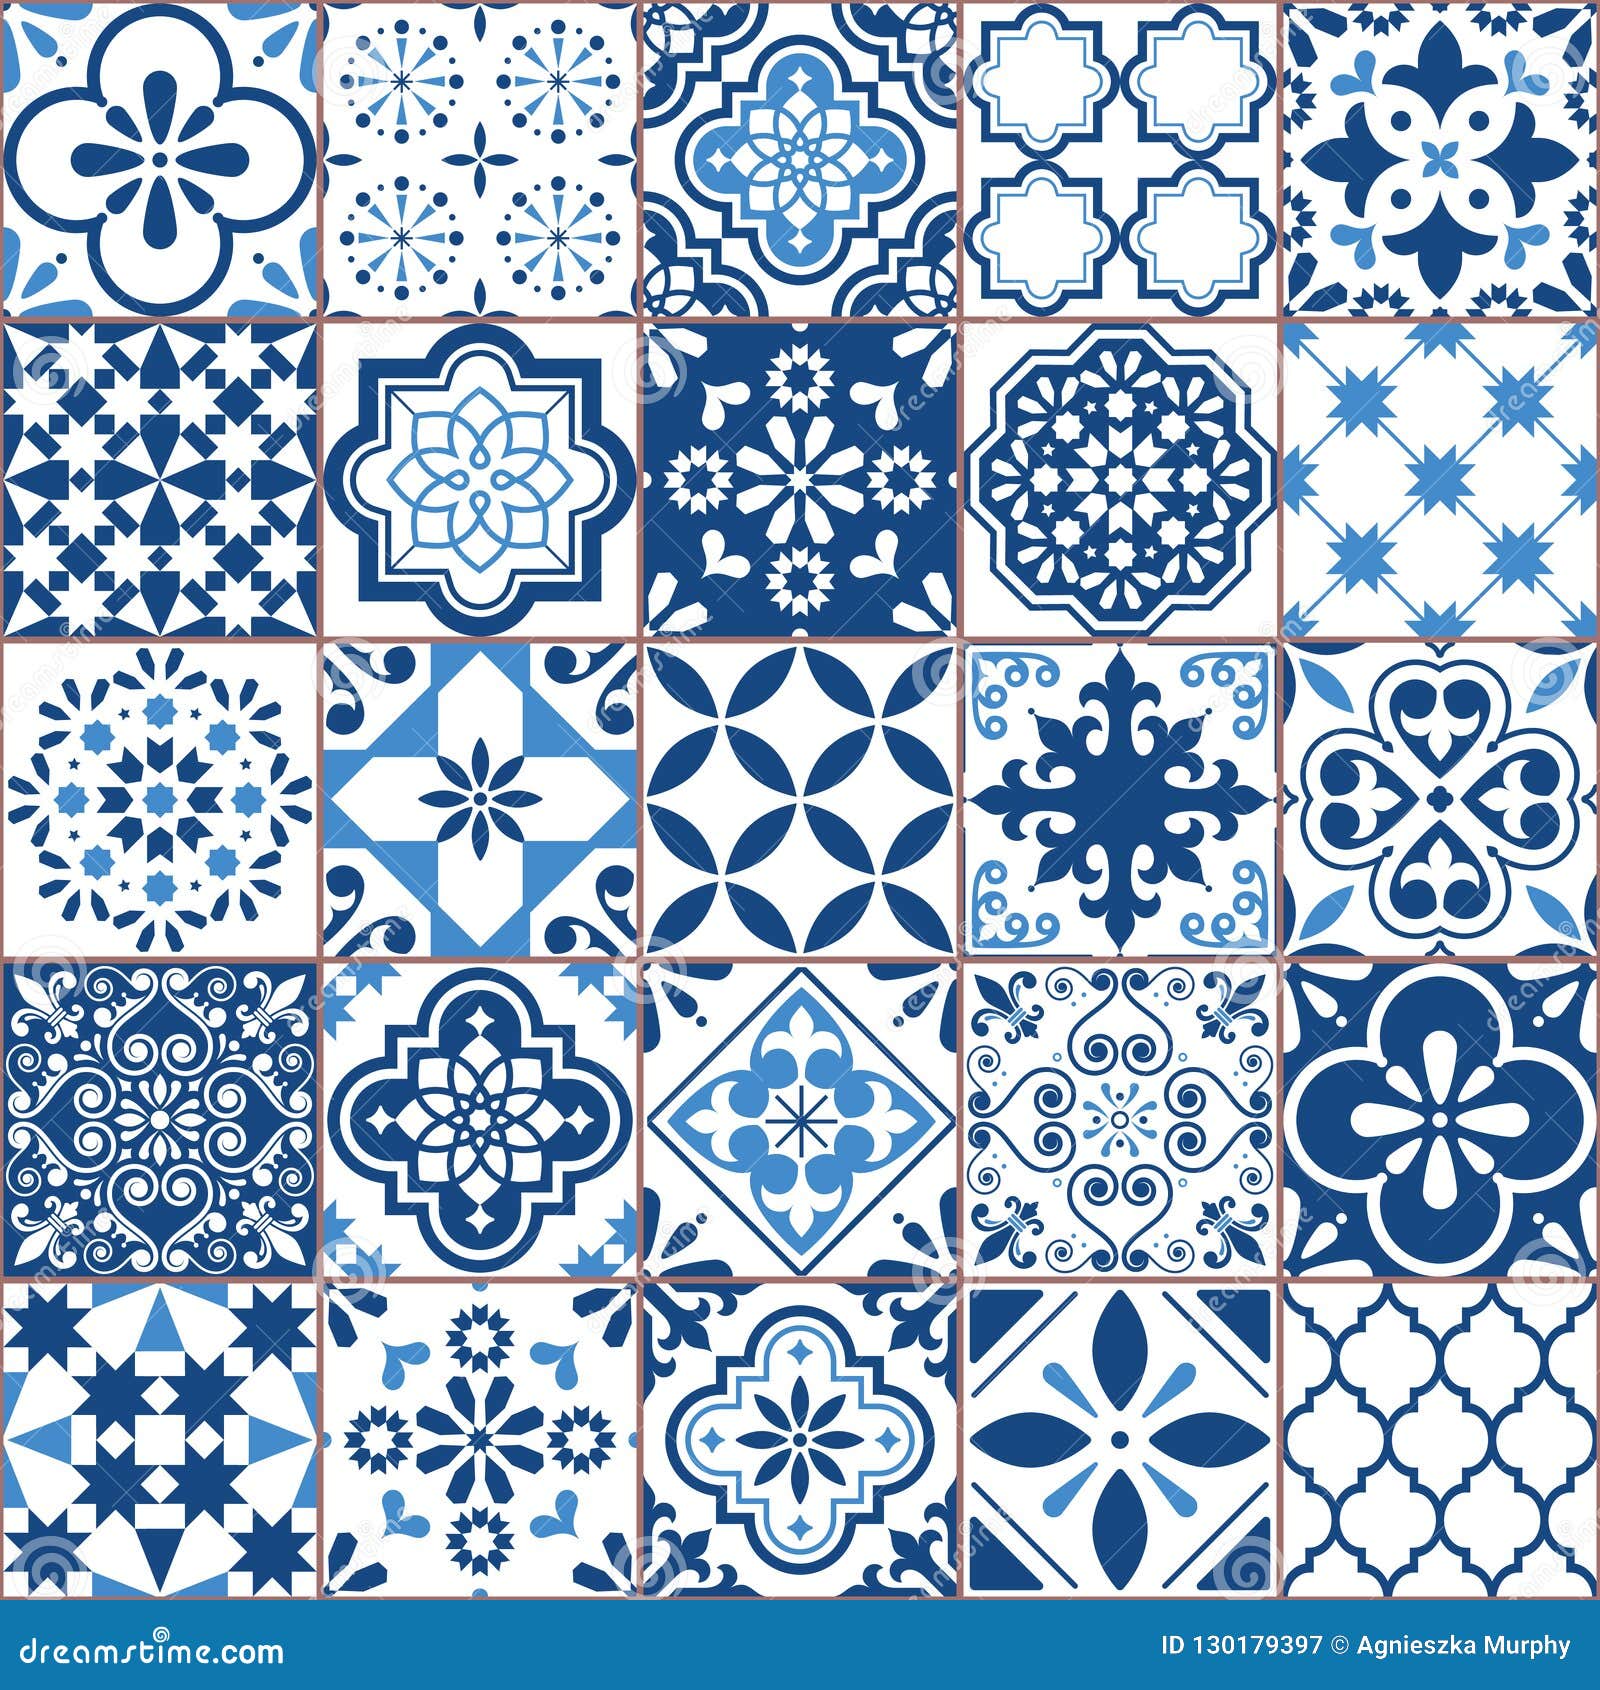 lisbon geometric azulejo tile  pattern, portuguese or spanish retro old tiles mosaic, mediterranean seamless navy blue desig